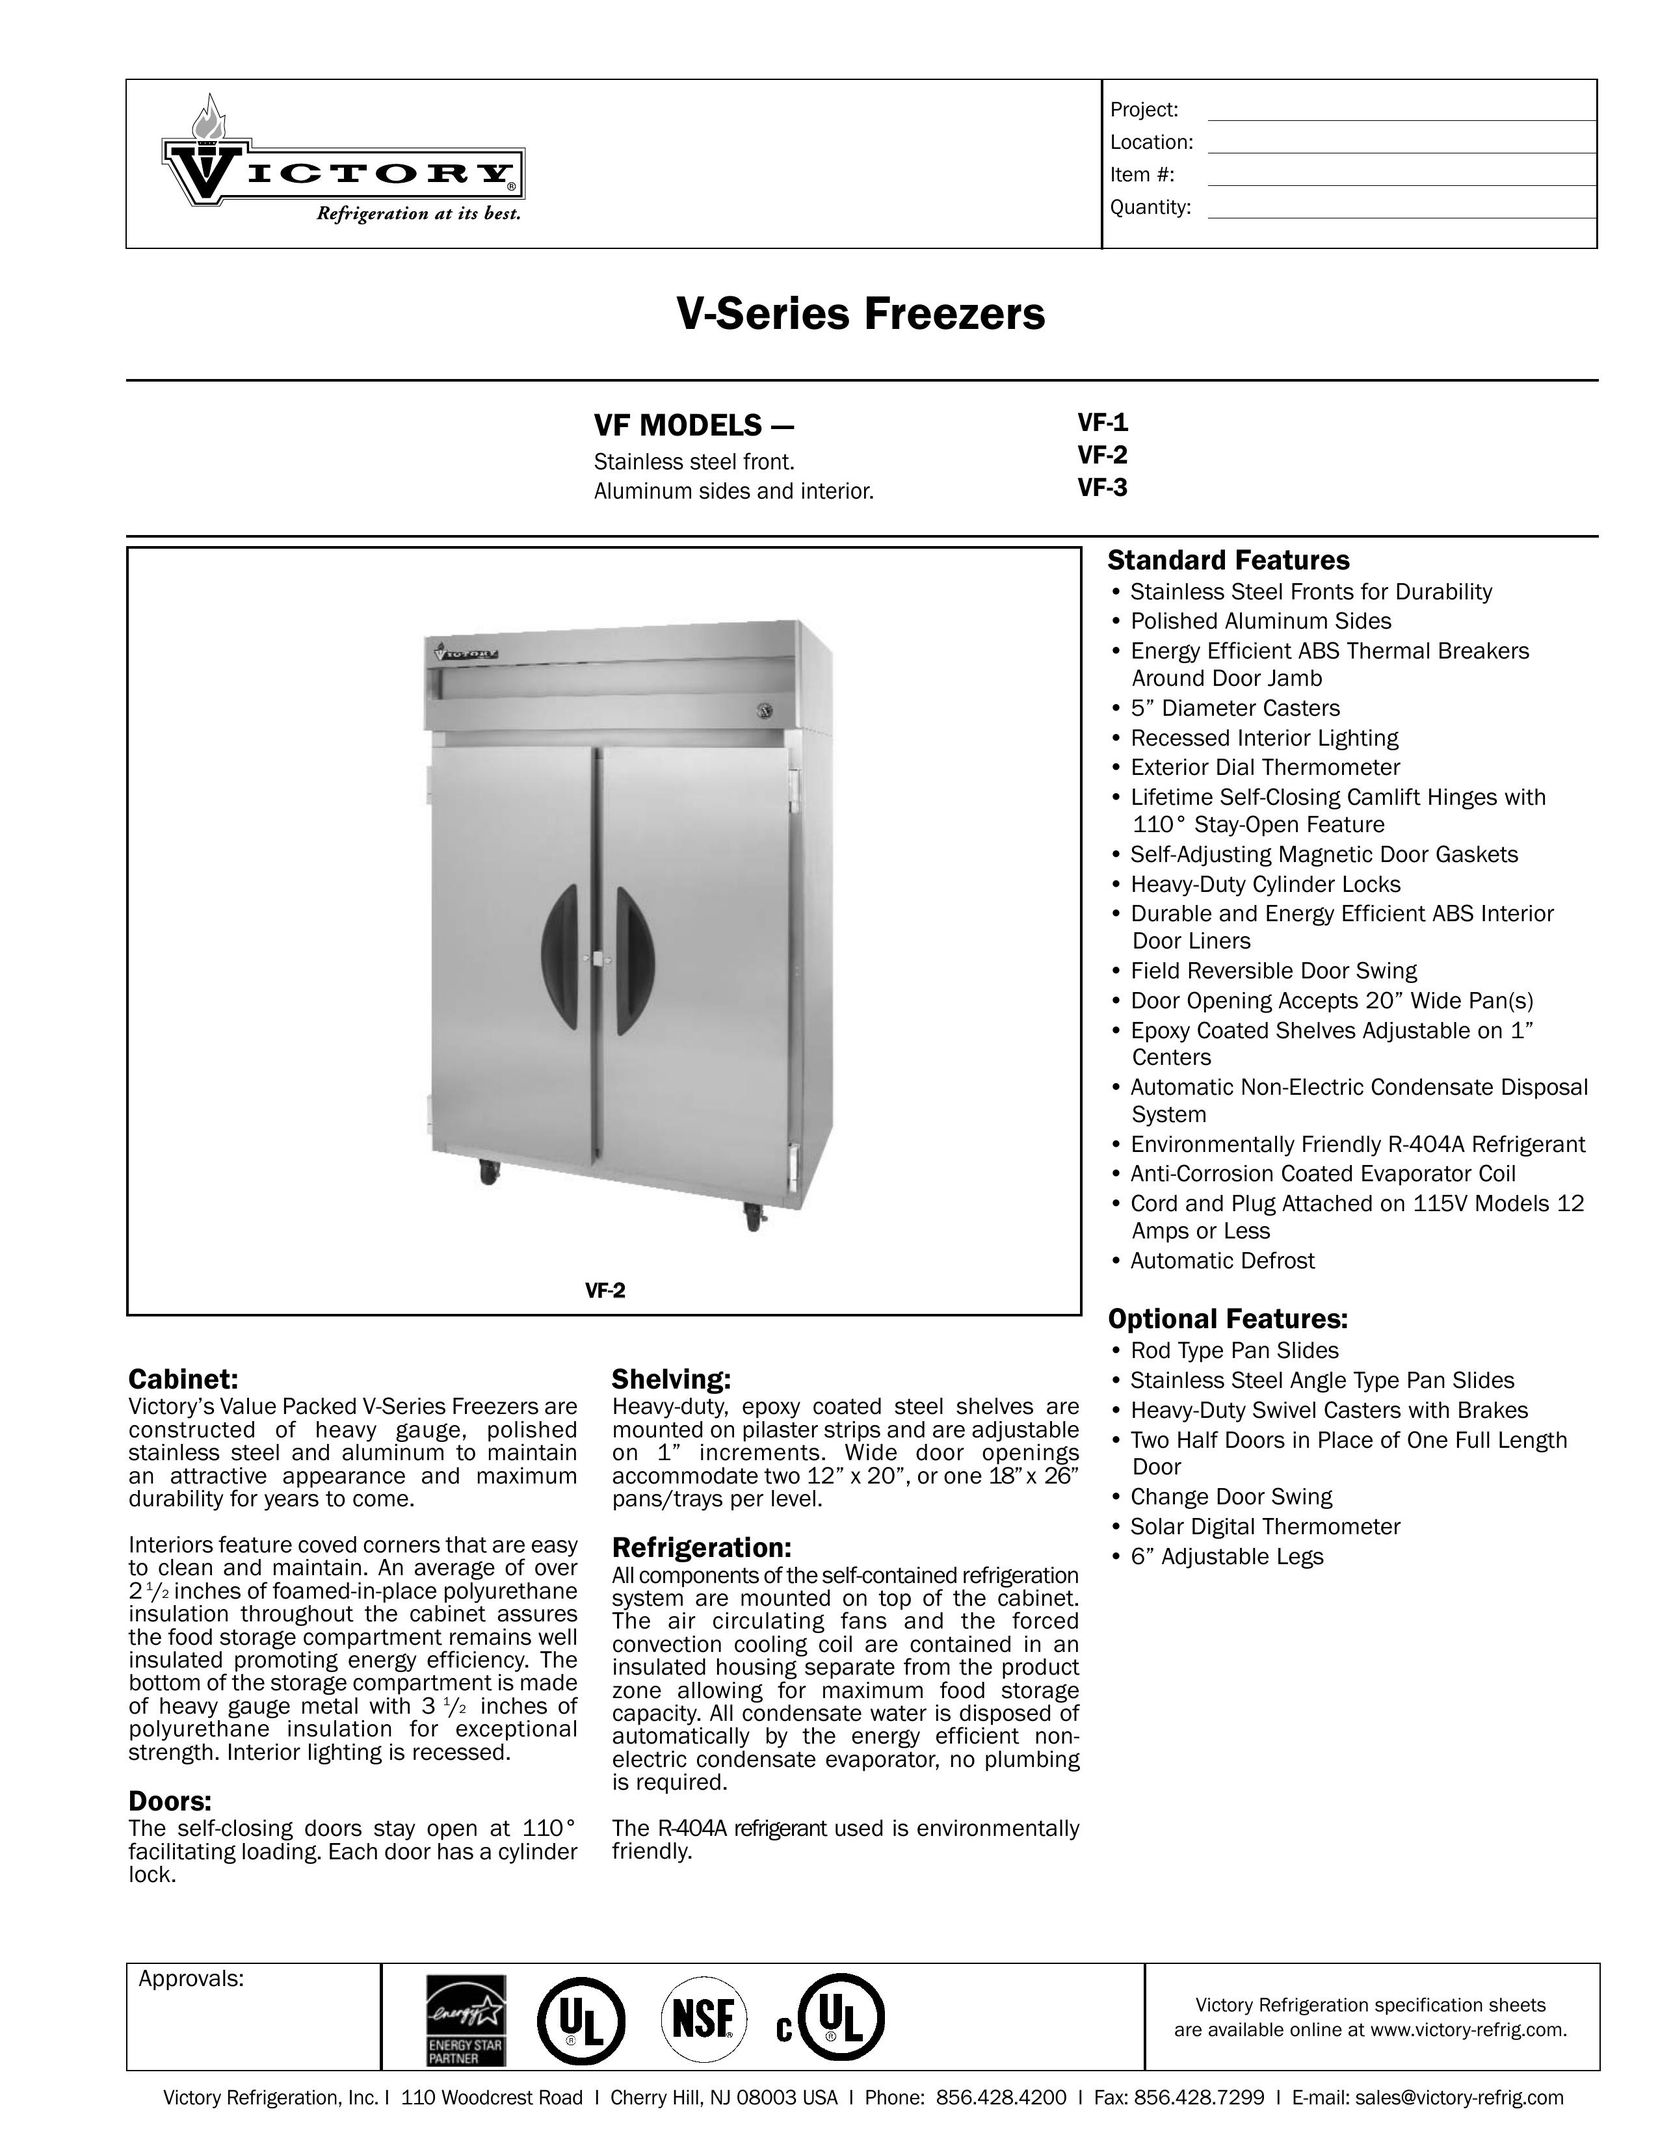 Victory Refrigeration VF-3 Freezer User Manual